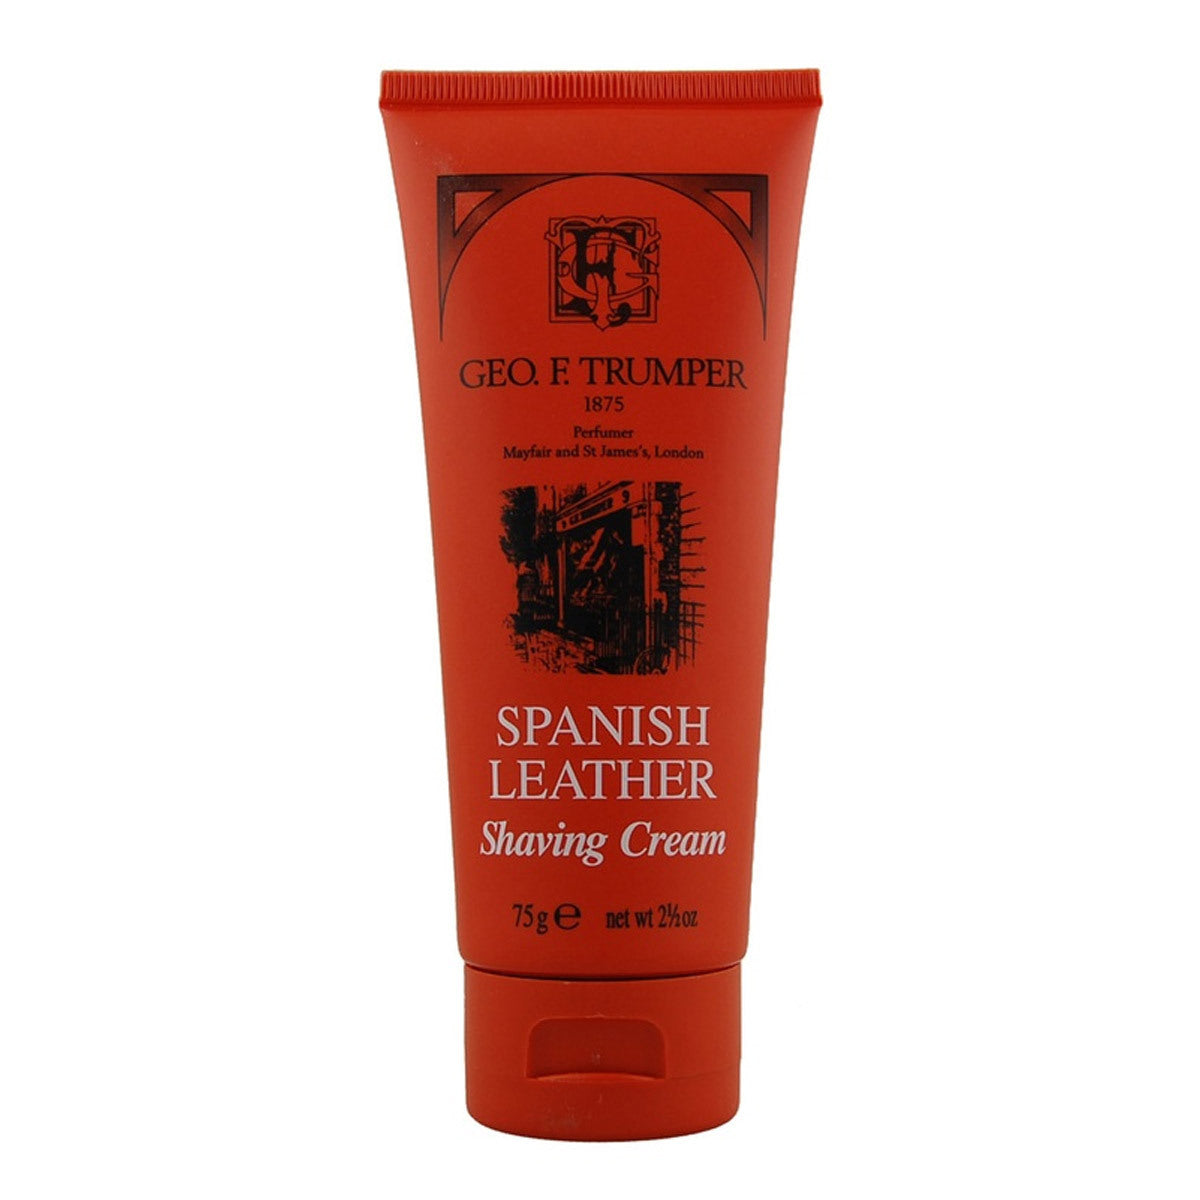 Primary image of Spanish Leather Shaving Cream